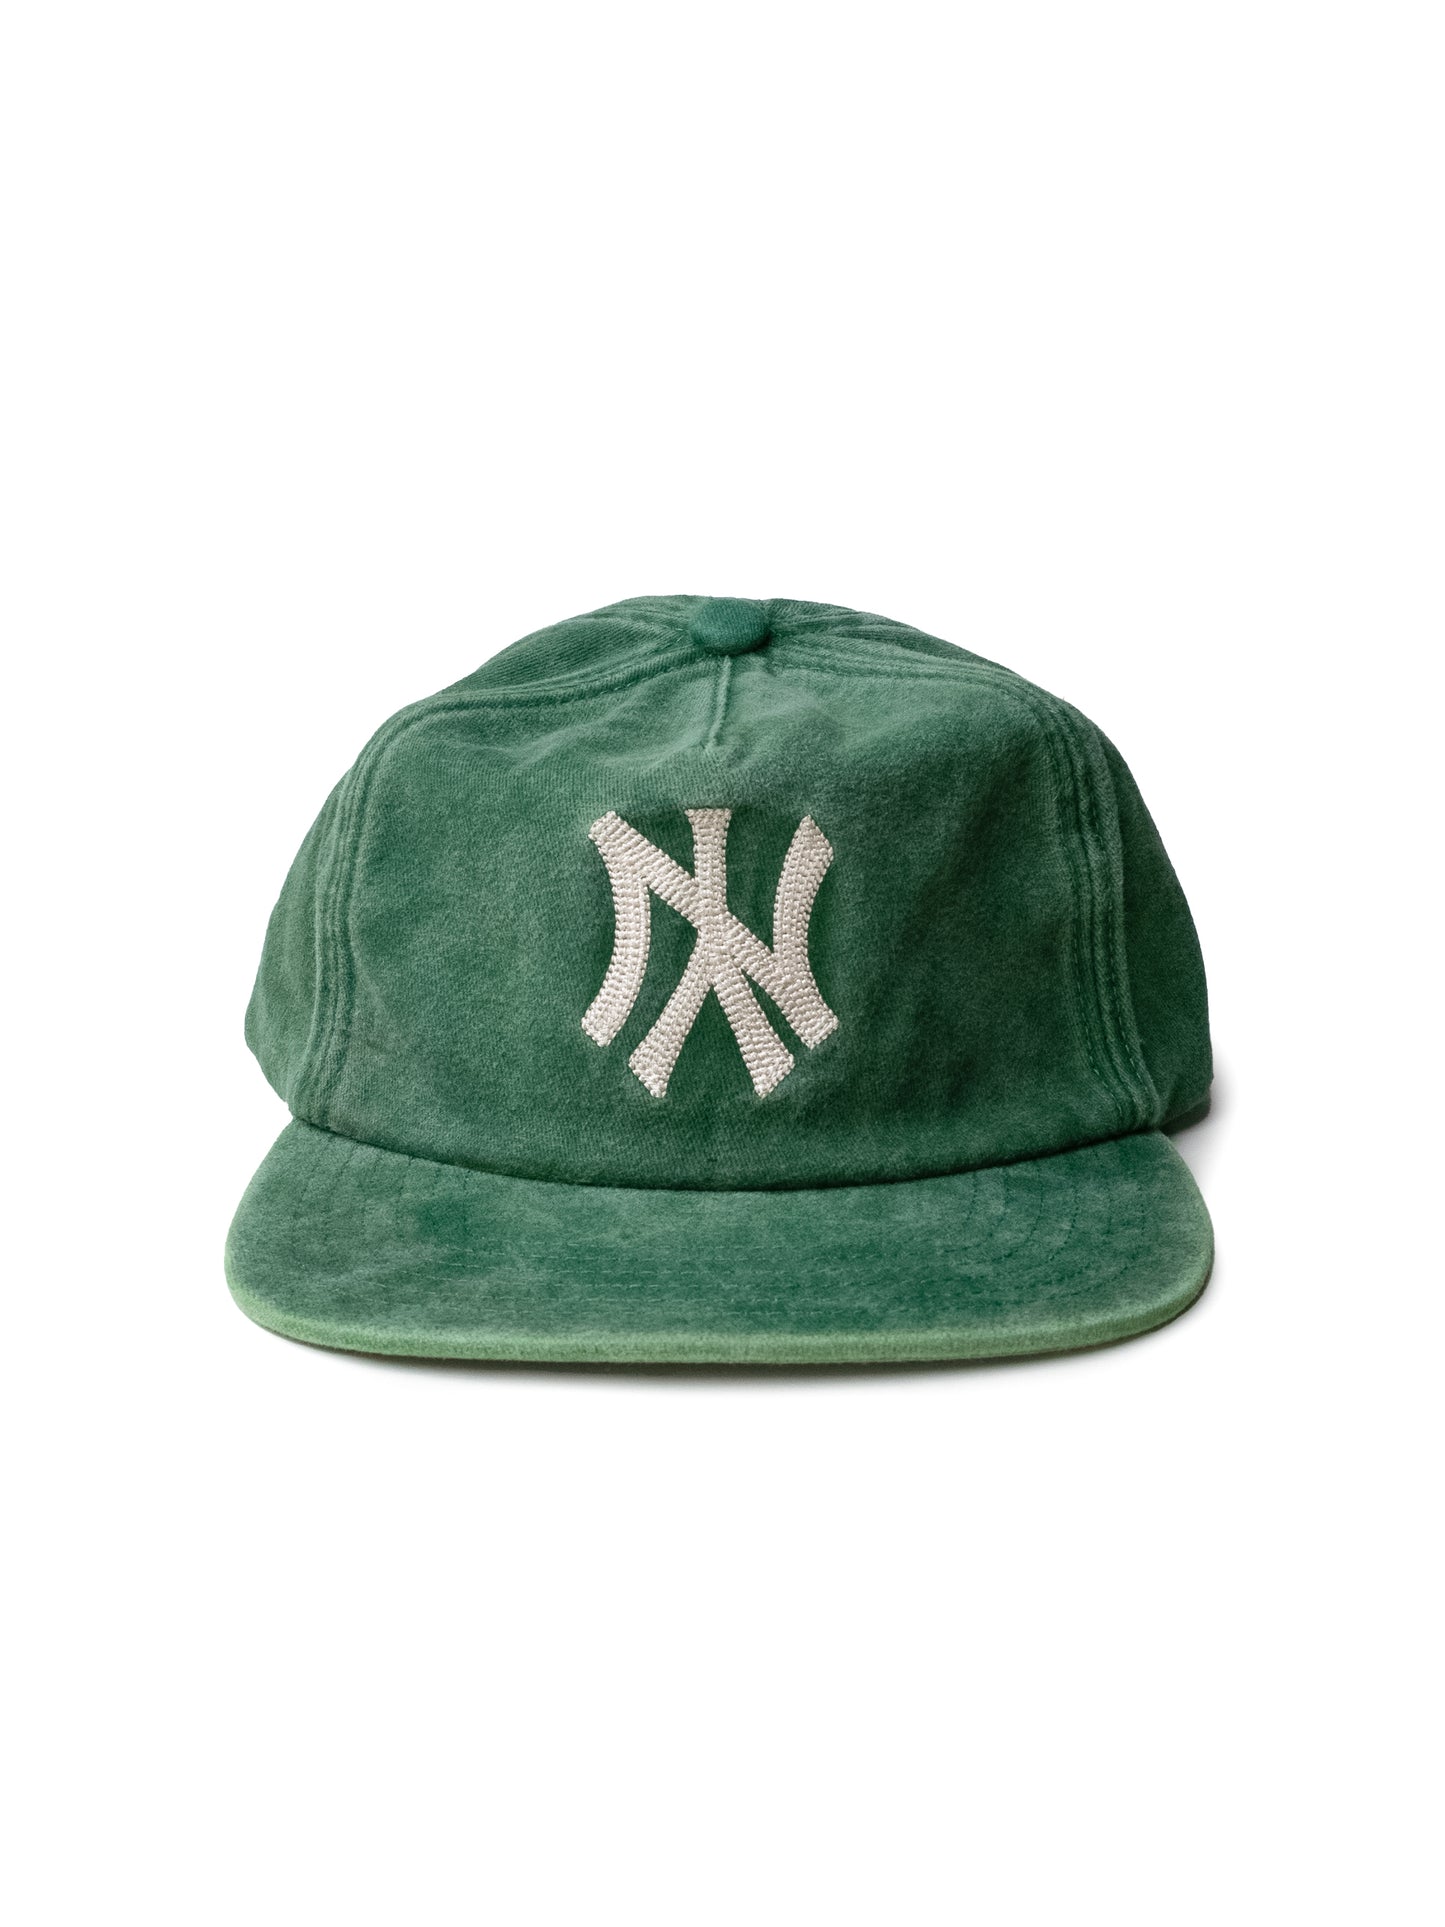 Classic Upside Down Yankees Hat